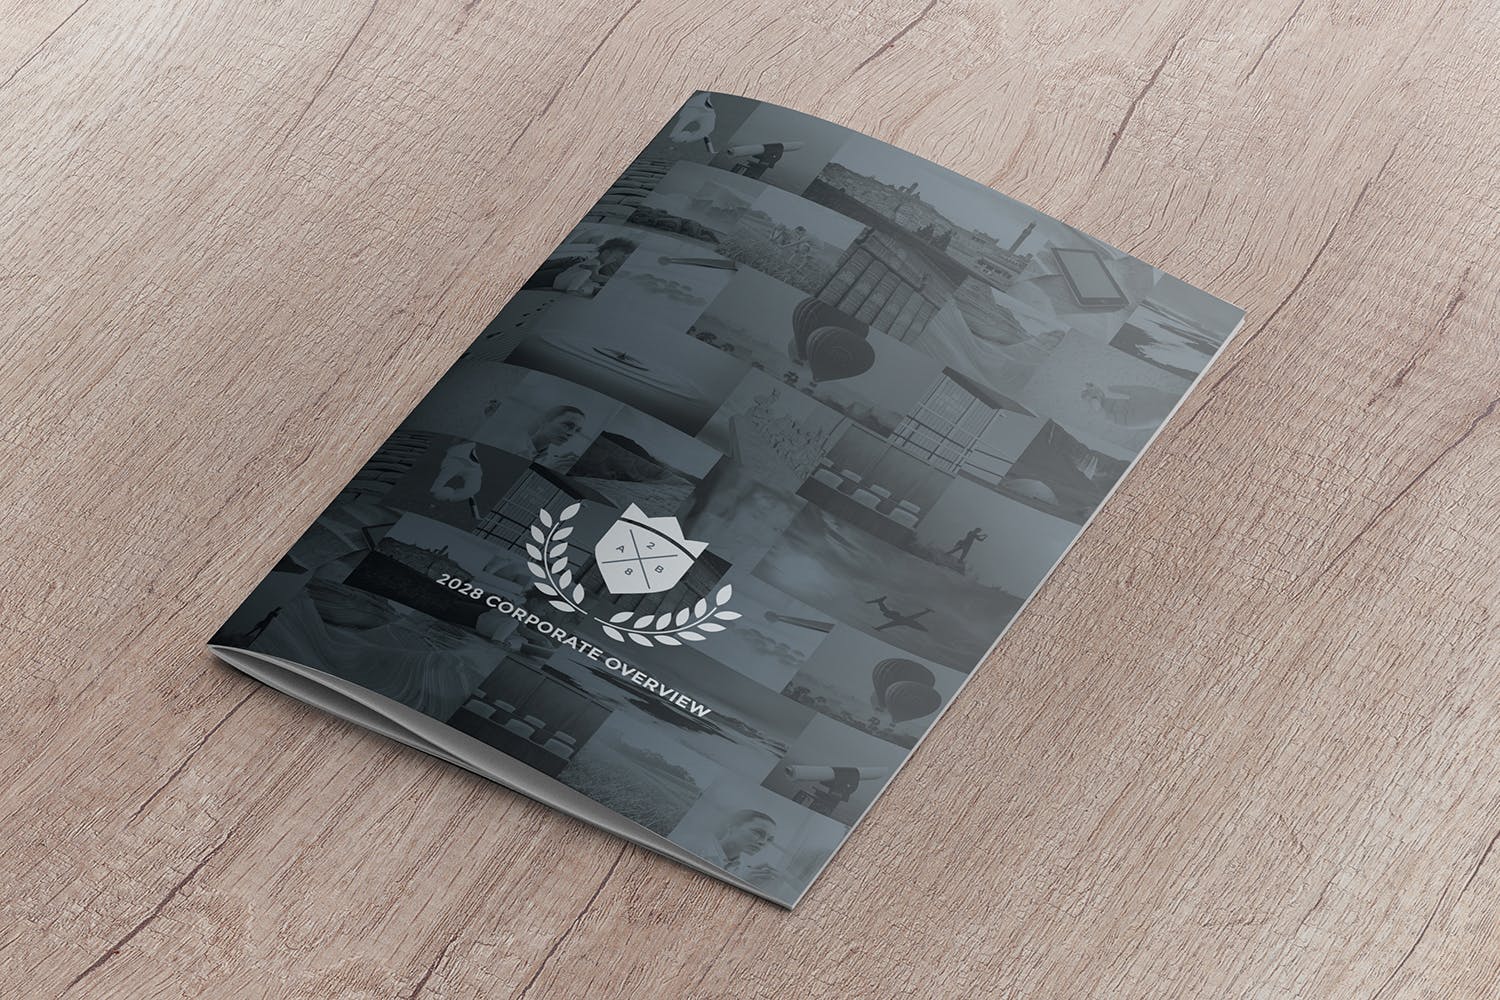 A4尺寸企业/品牌宣传册封面效果图样机非凡图库精选模板 A4 Brochure Cover Mockup Perspective View插图(2)